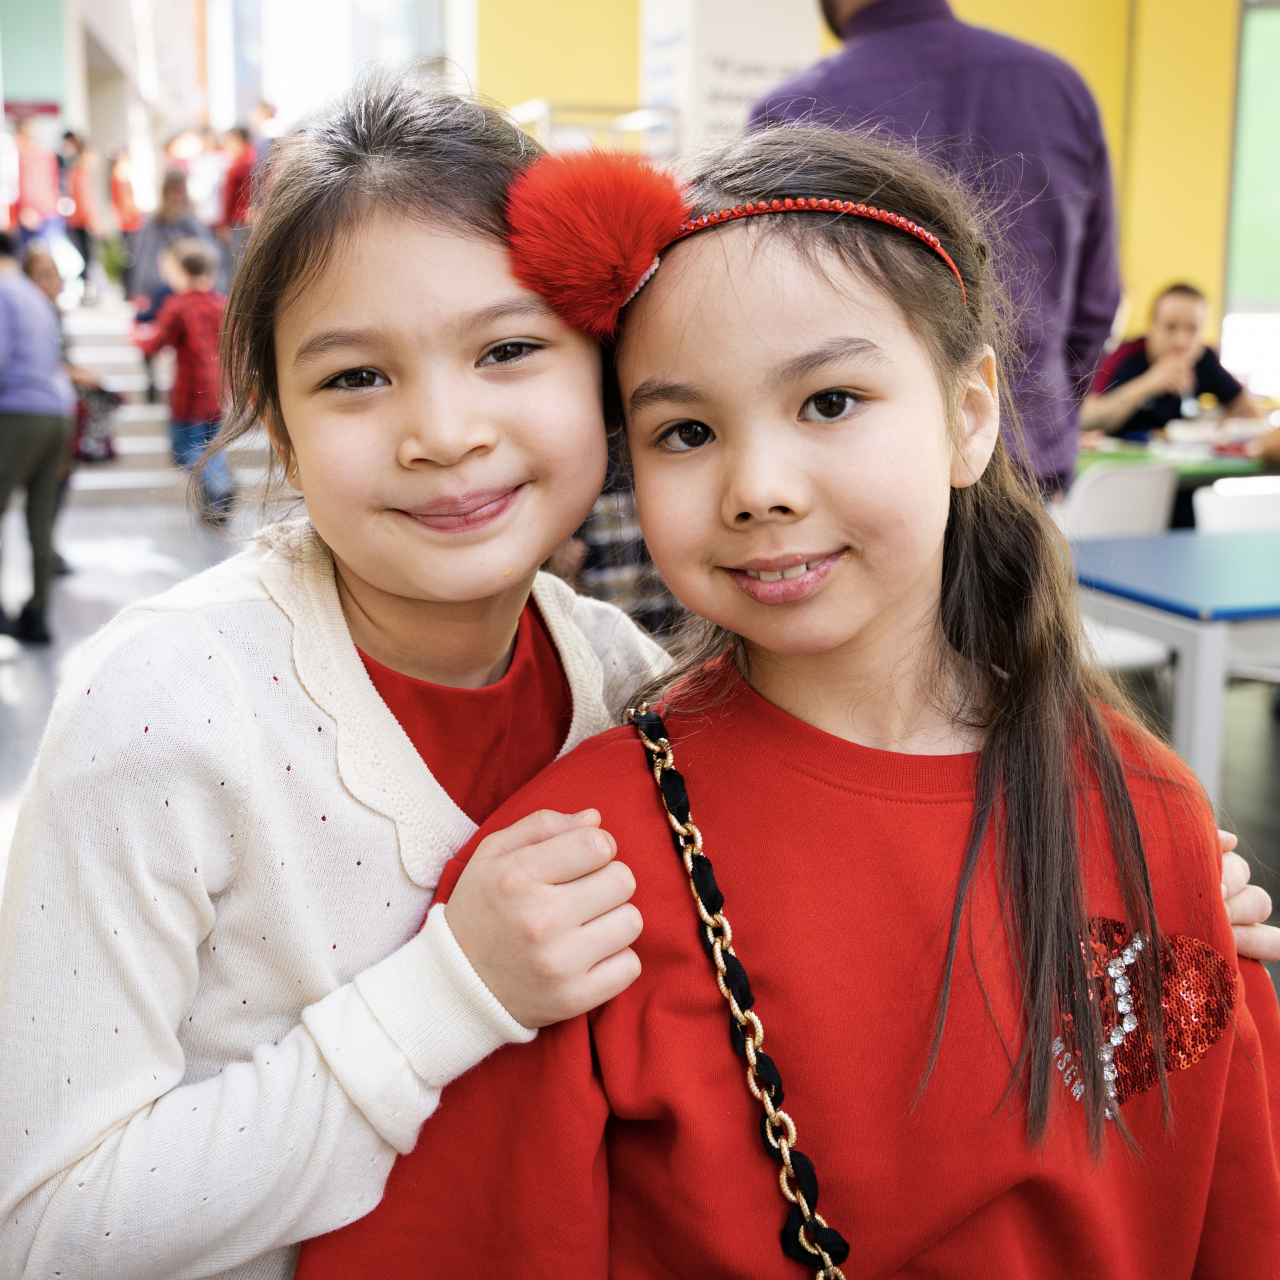 Haileybury Almaty Community Raises 2.2 Million KZT for Charity